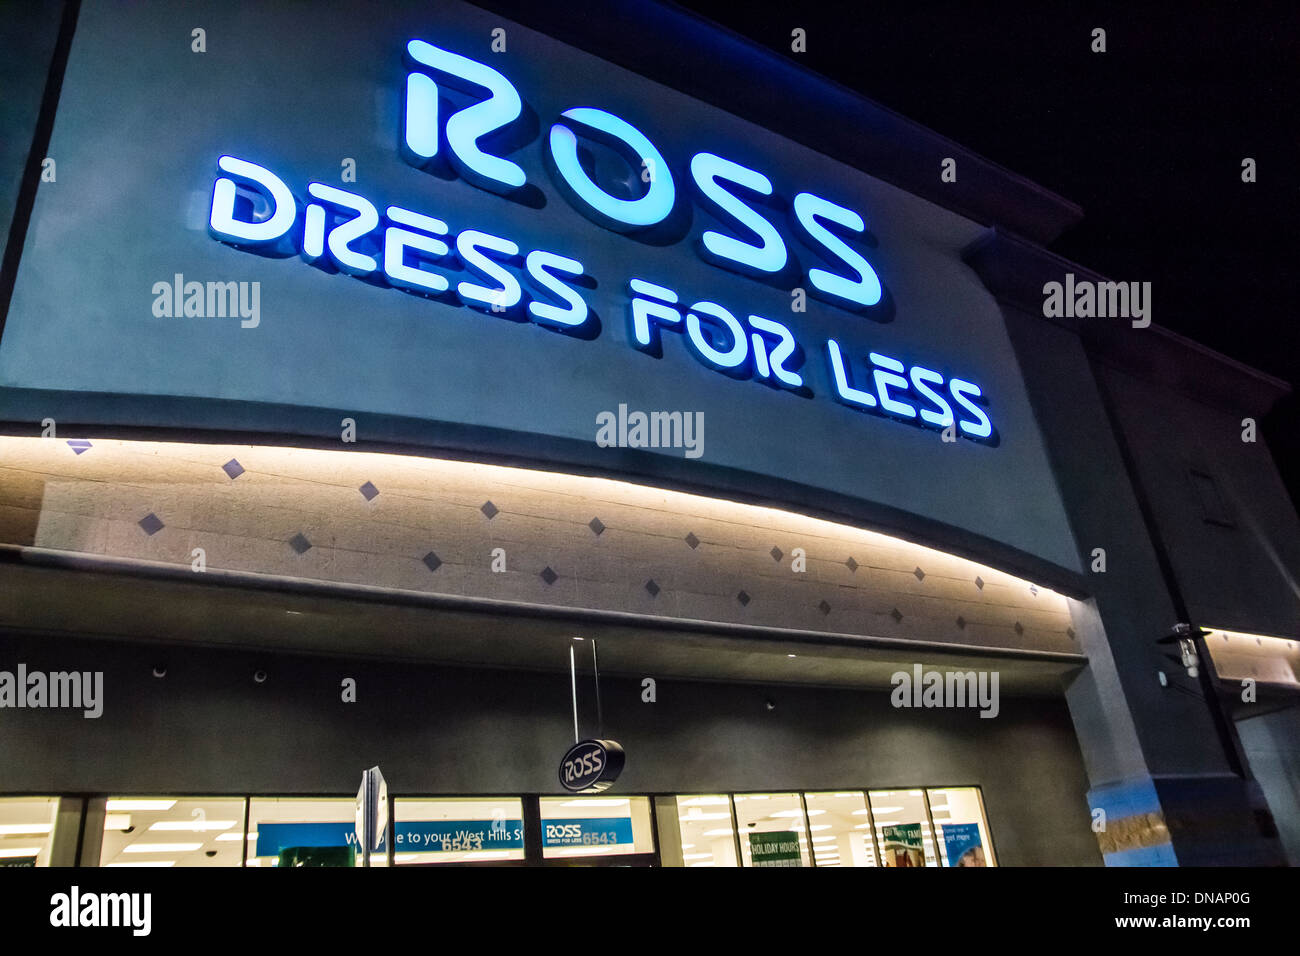 ross dress for less shop